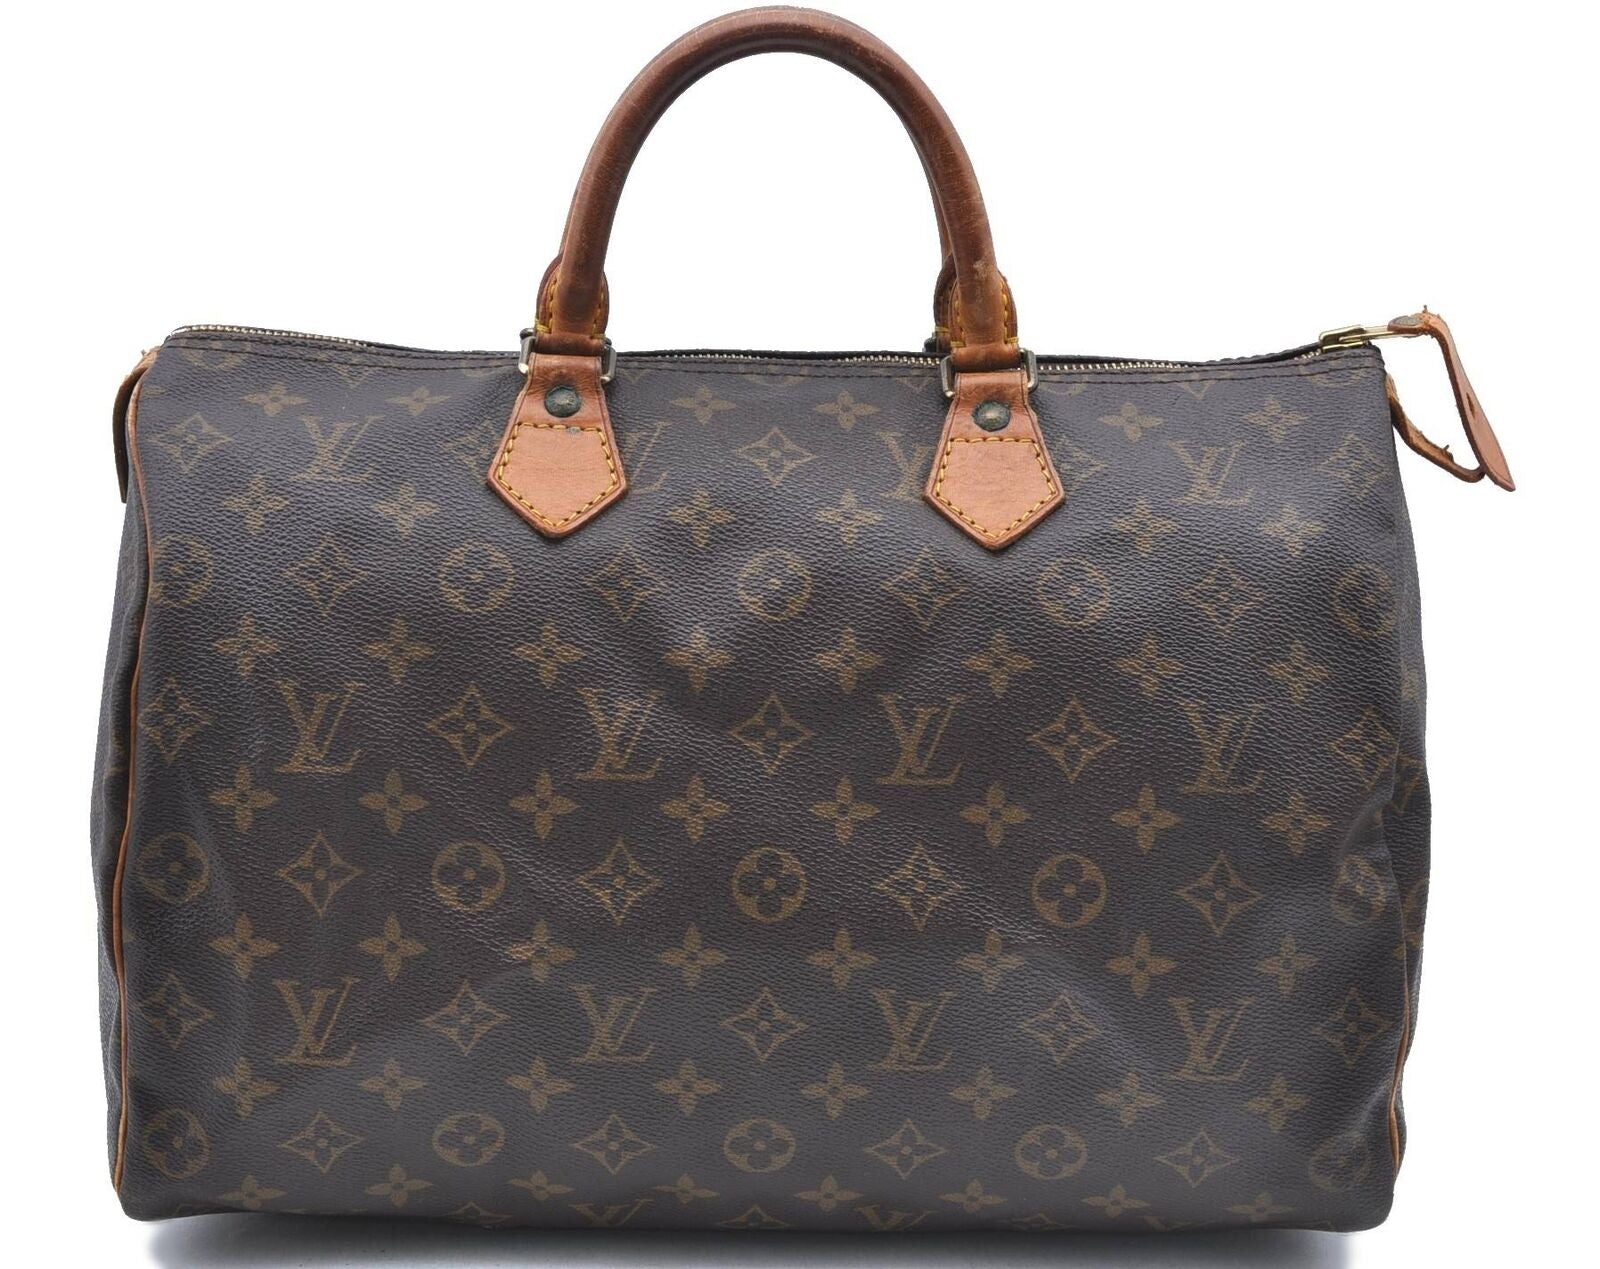 Authentic Louis Vuitton Monogram Speedy 35 Hand Bag M41524 LV H6106